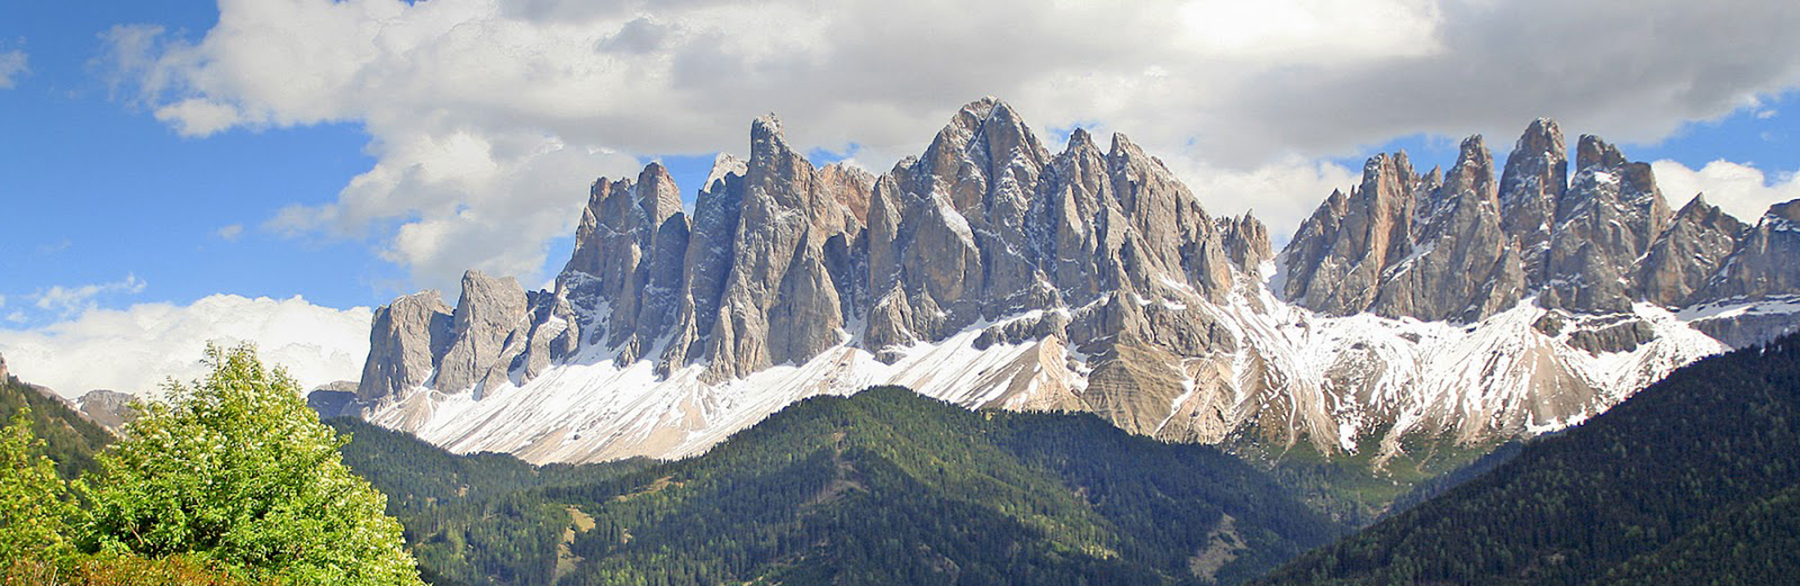 Dolomites-Italy Cropped